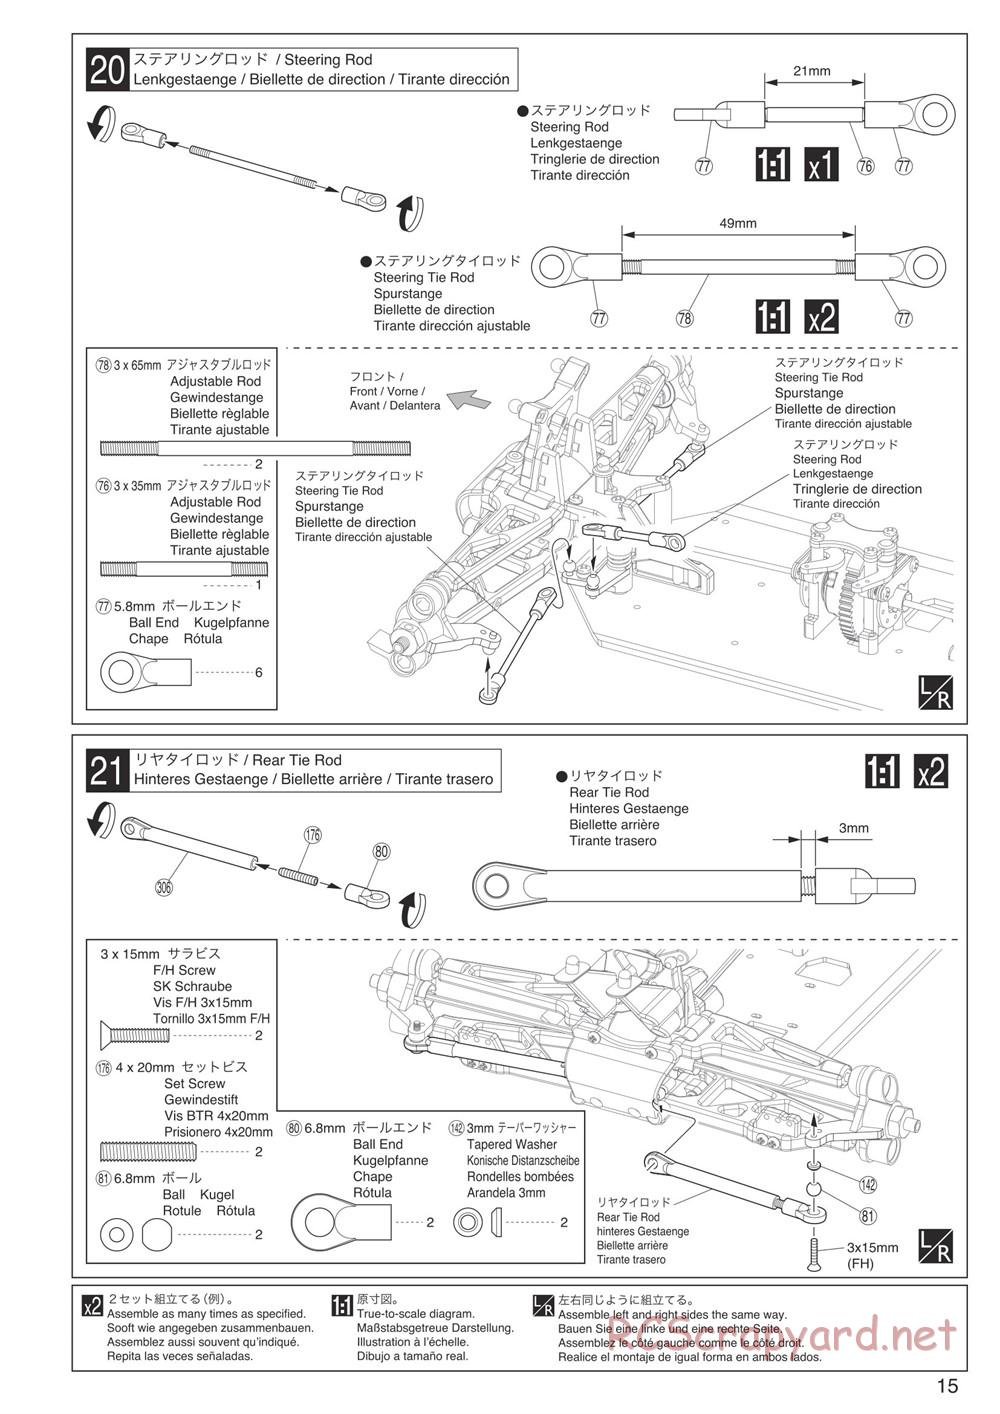 Kyosho - DBX 2.0 - Manual - Page 15